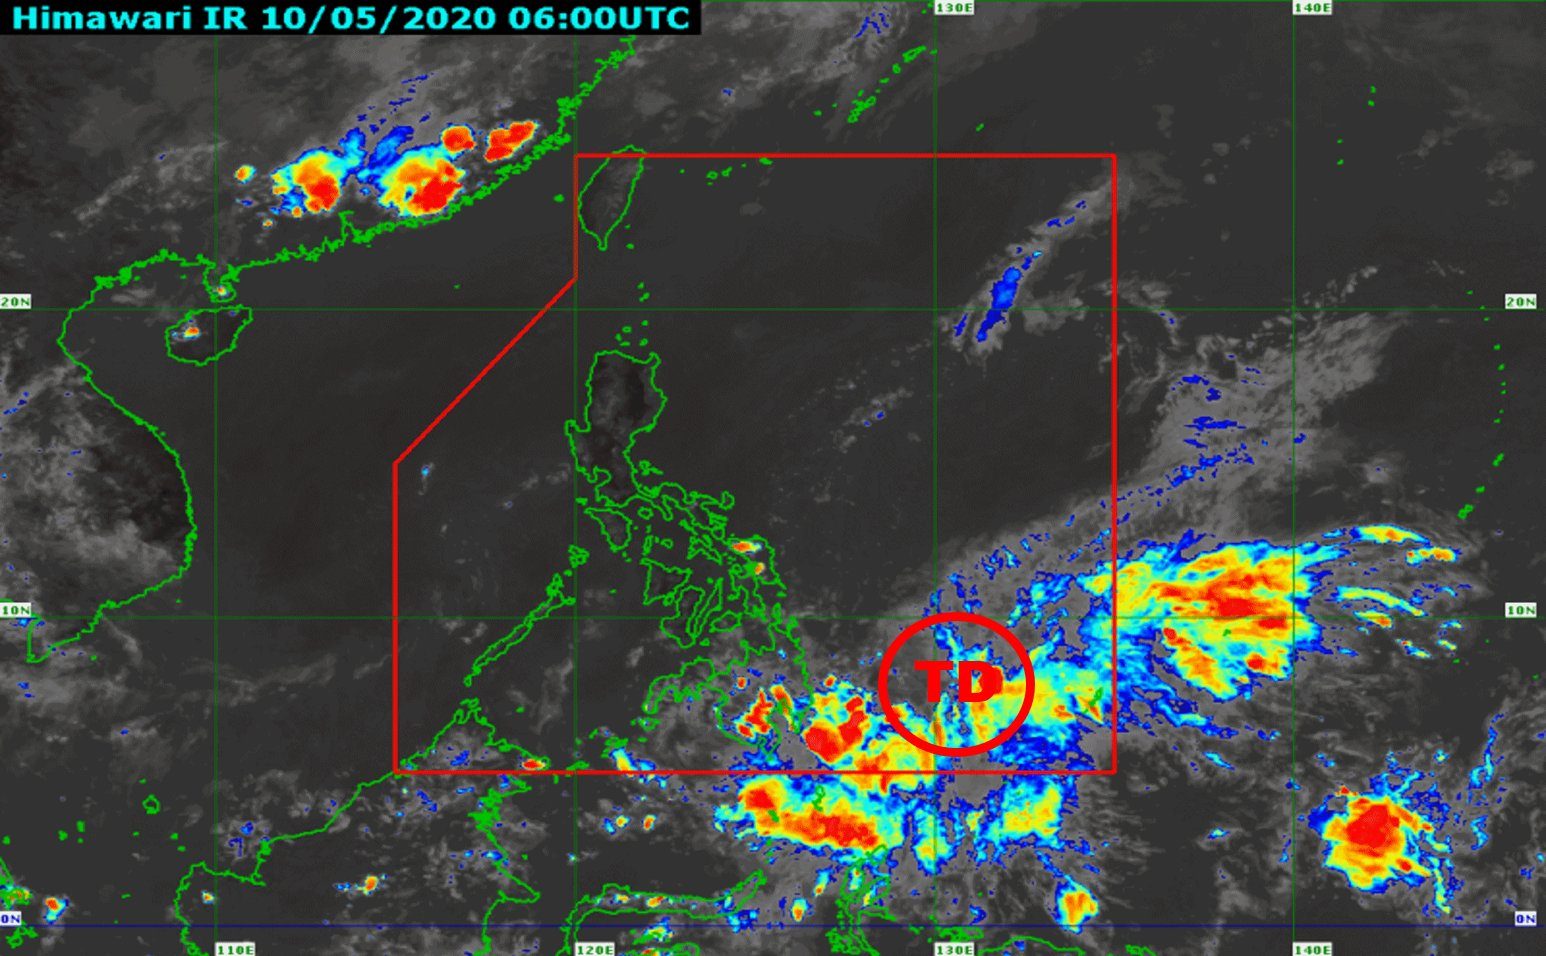 LPA off Mindanao develops into Tropical Depression Ambo